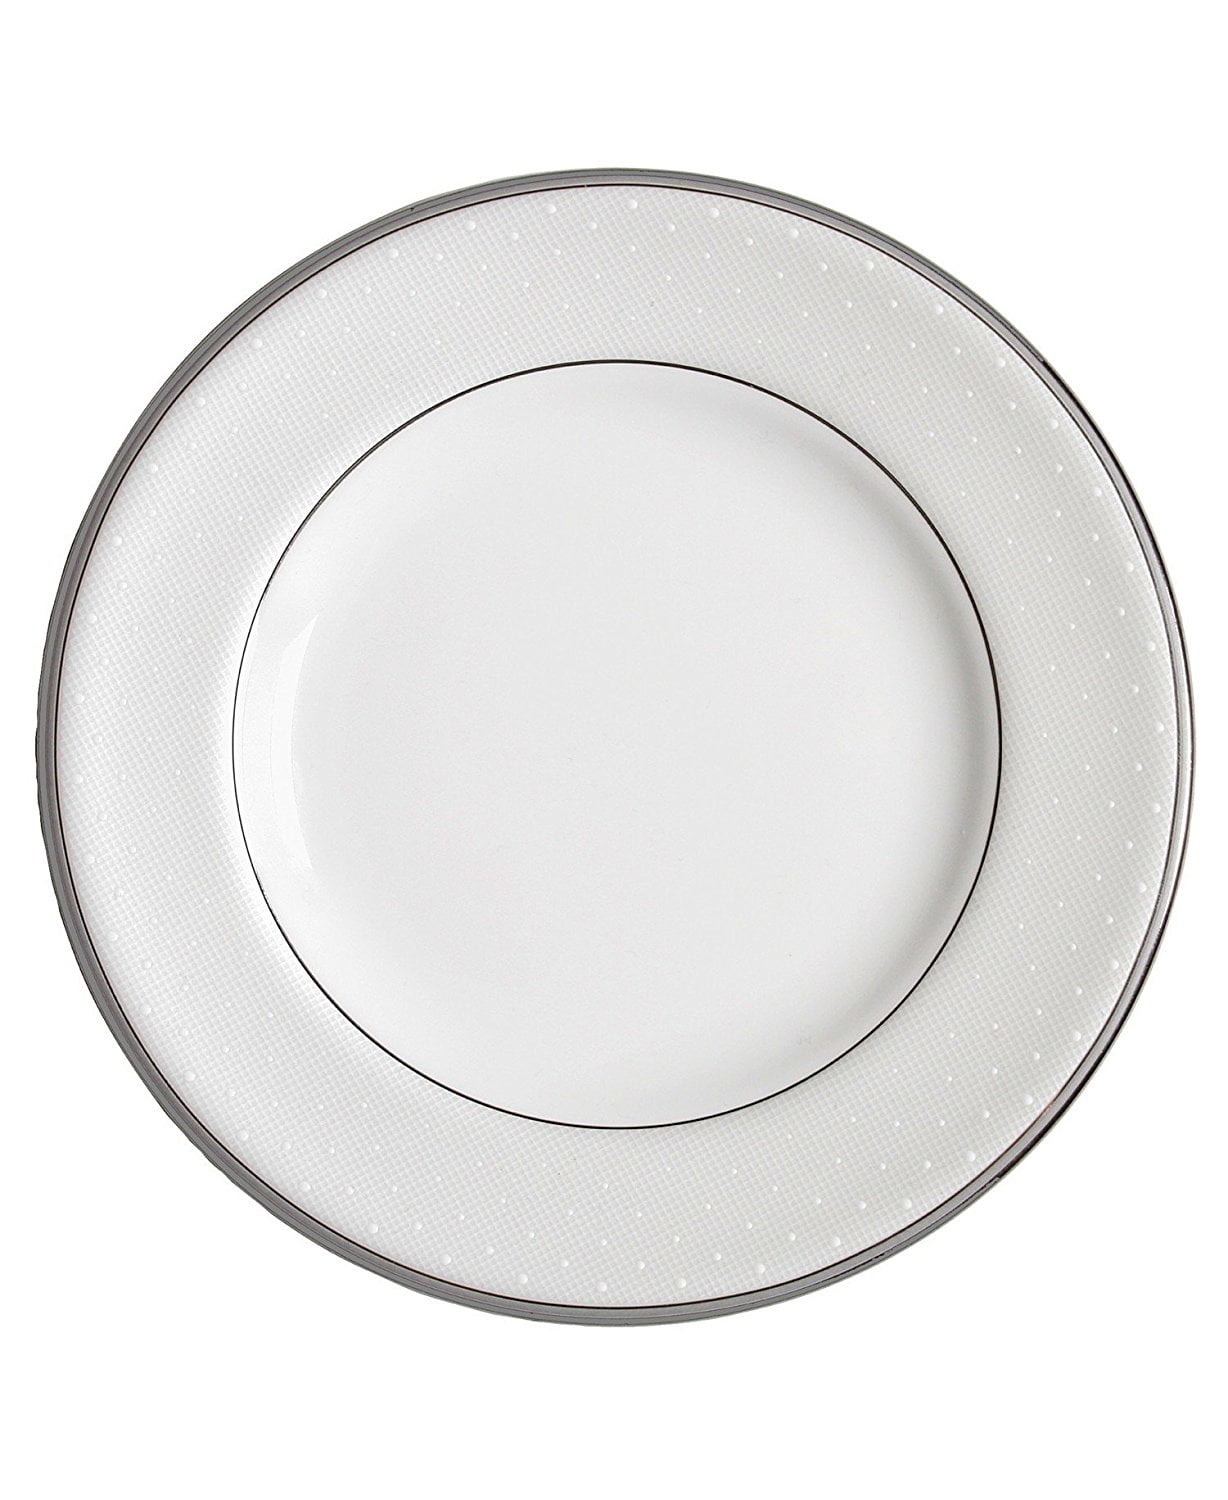 Dinnerware Sets Home & Living Desire Royal Doulton 8 Salad Plate ...